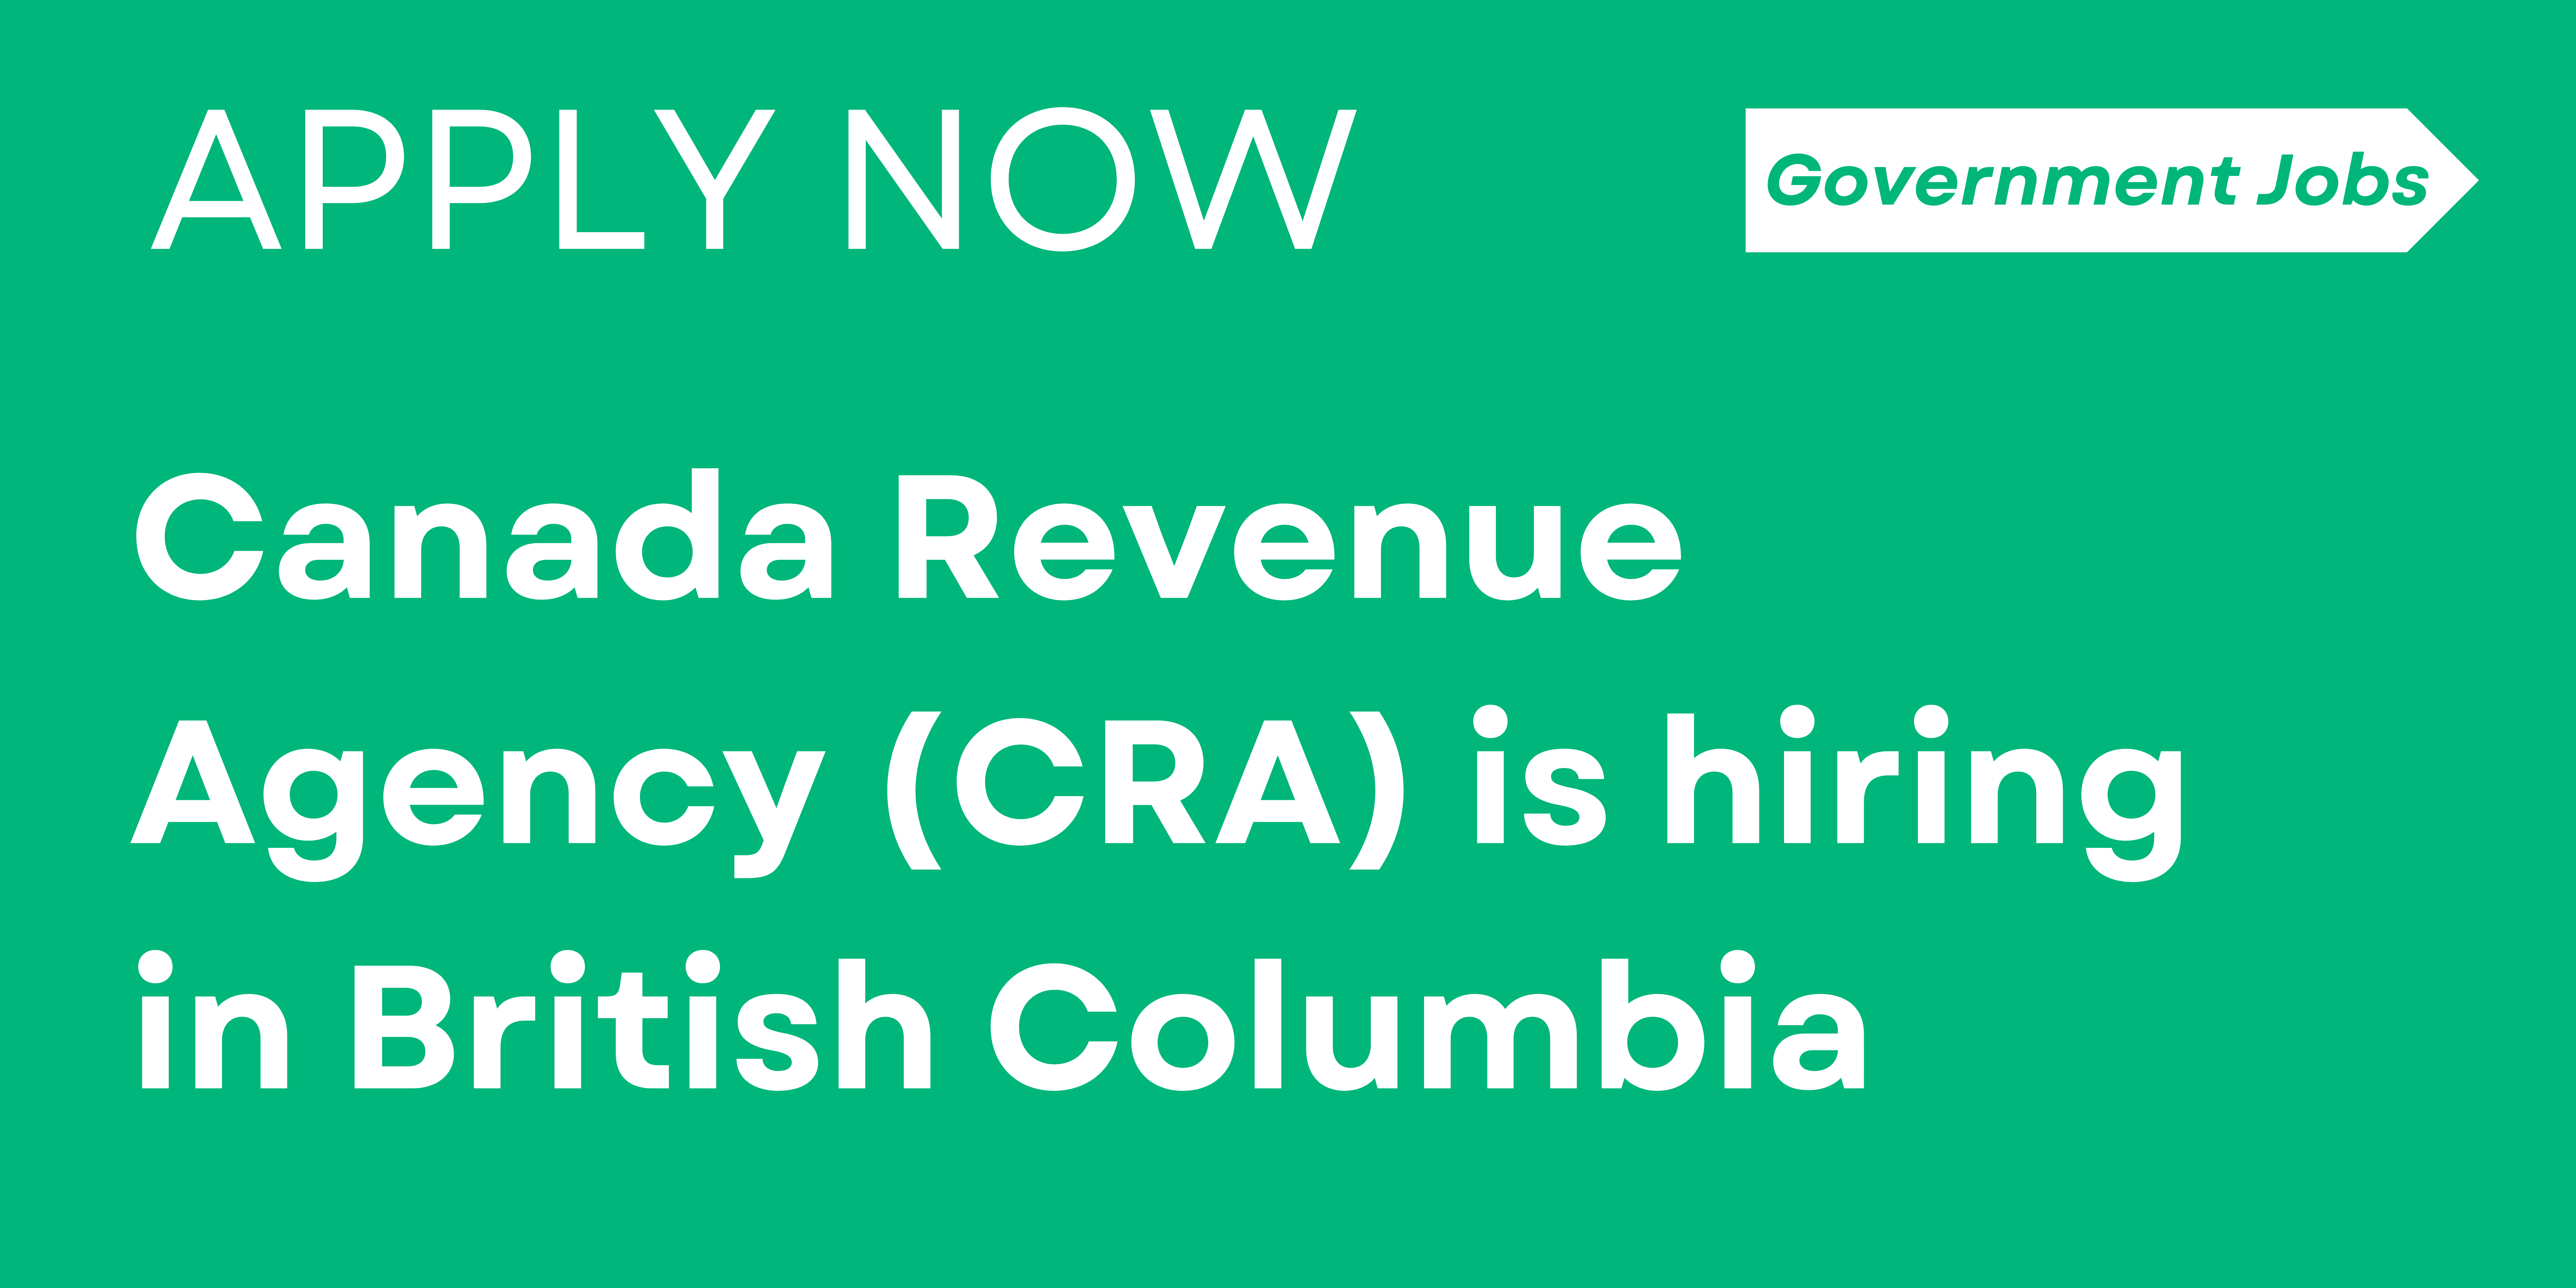 Canada Revenue Agency (CRA) is hiring in British Columbia